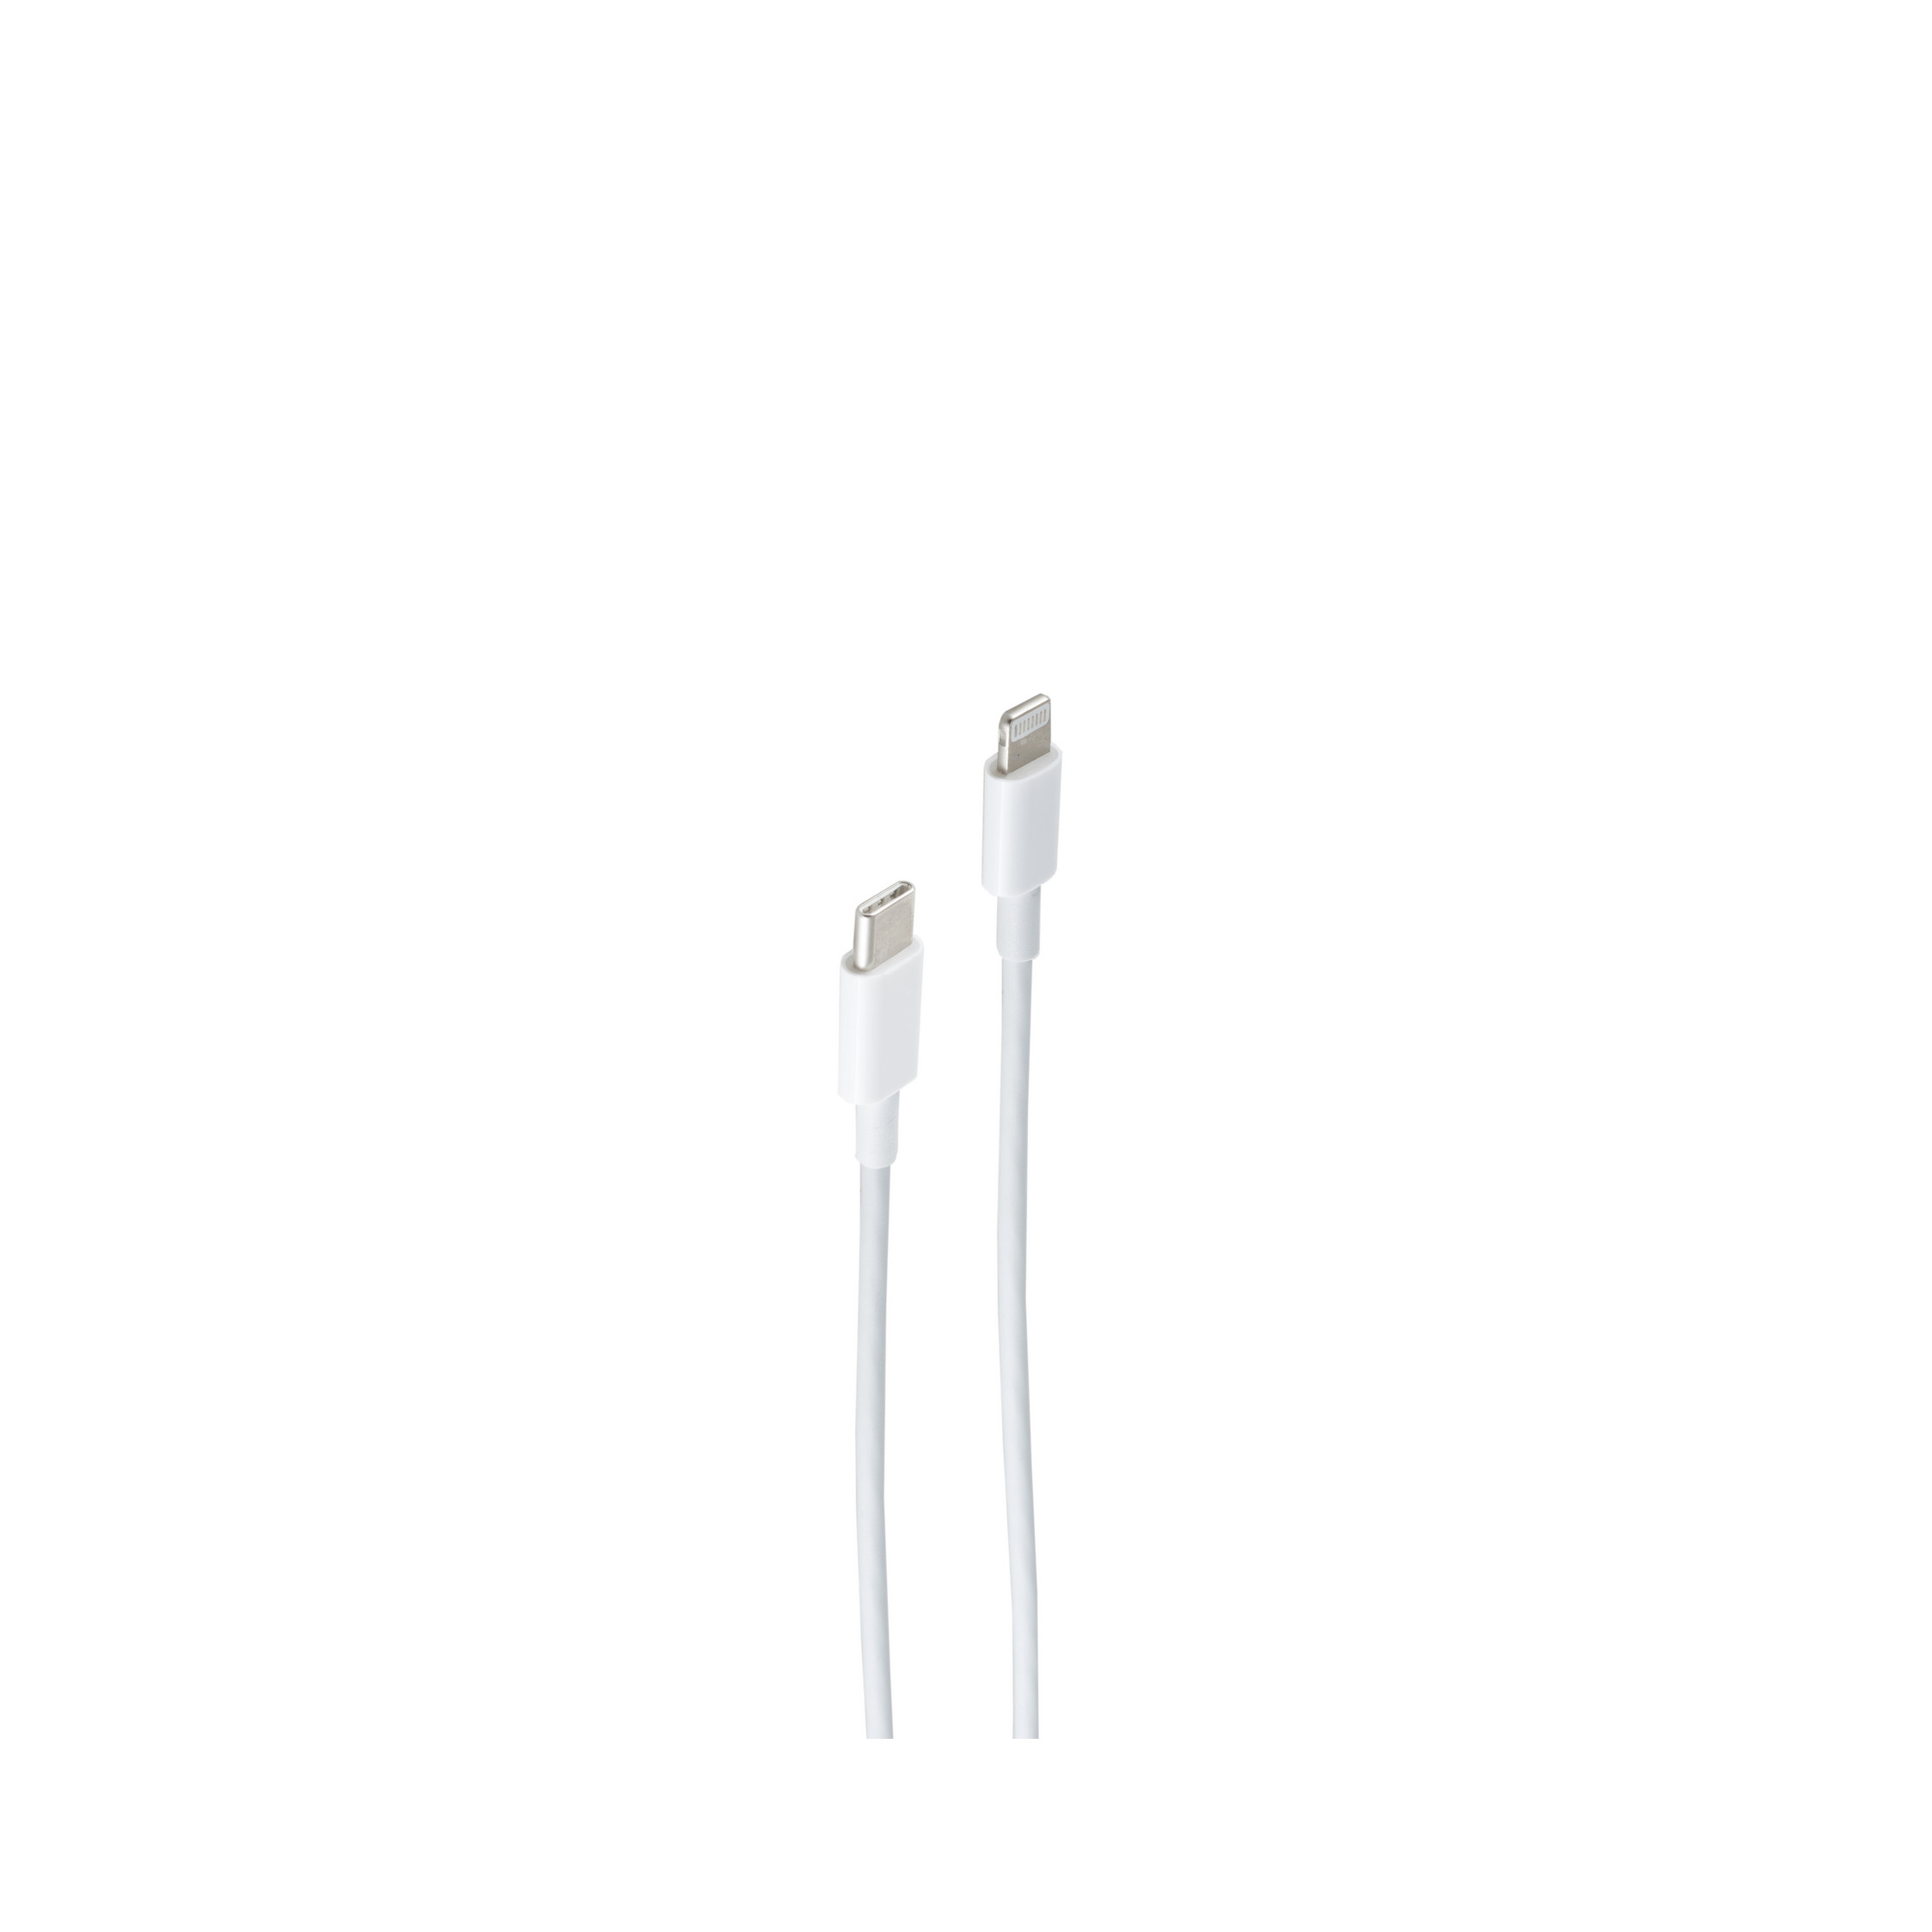 SHIVERPEAKS Lade 8-pin 1,5m, 1,5 Stecker, USB-C® auf USB Ladekabel, Kabel, m, Stecker weiß